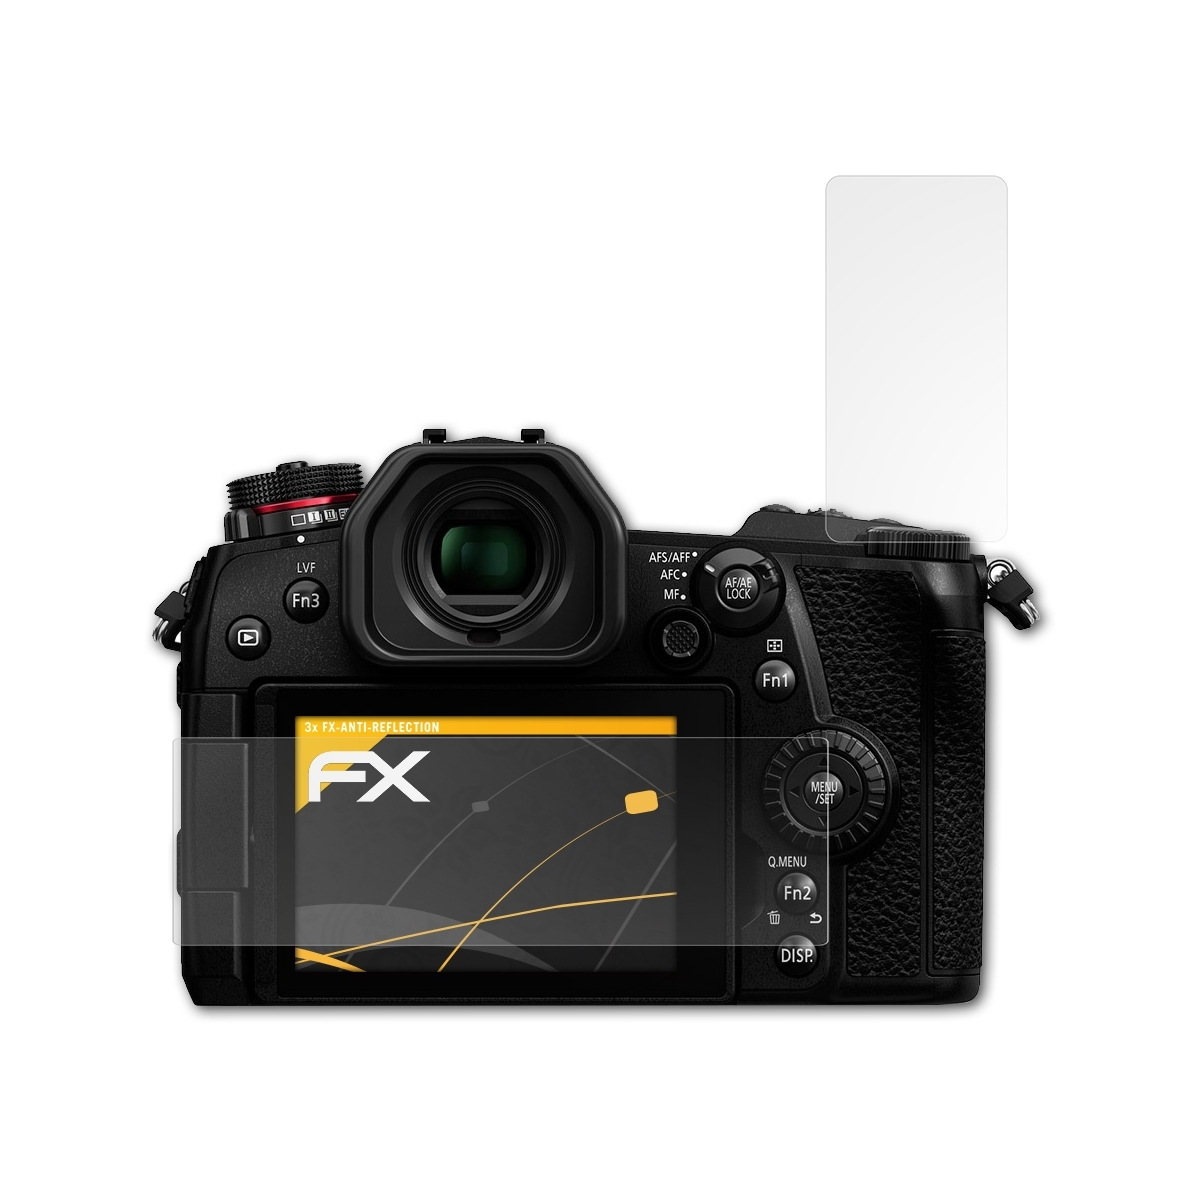 ATFOLIX 3x FX-Antireflex Displayschutz(für Panasonic DC-G9) Lumix